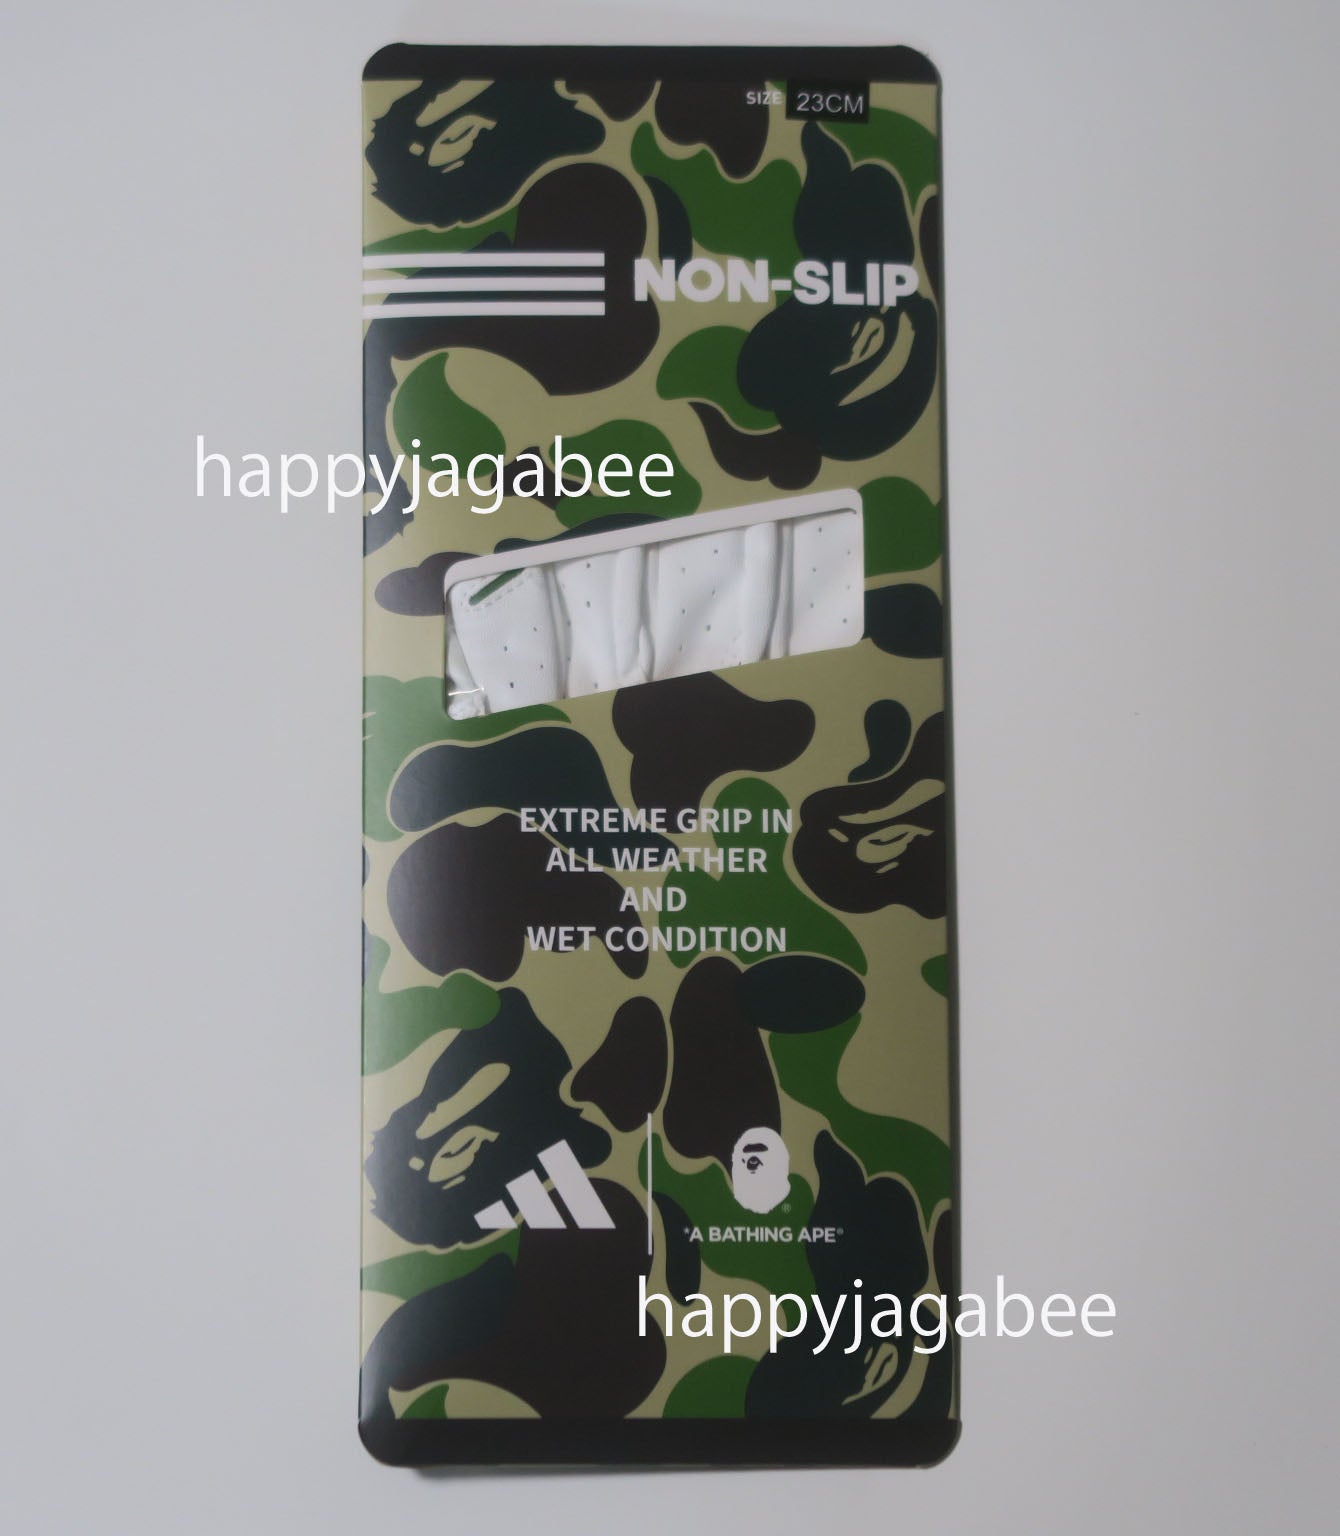 A BATHING APE BAPE x ADIDAS GOLF GLOVE – happyjagabee store